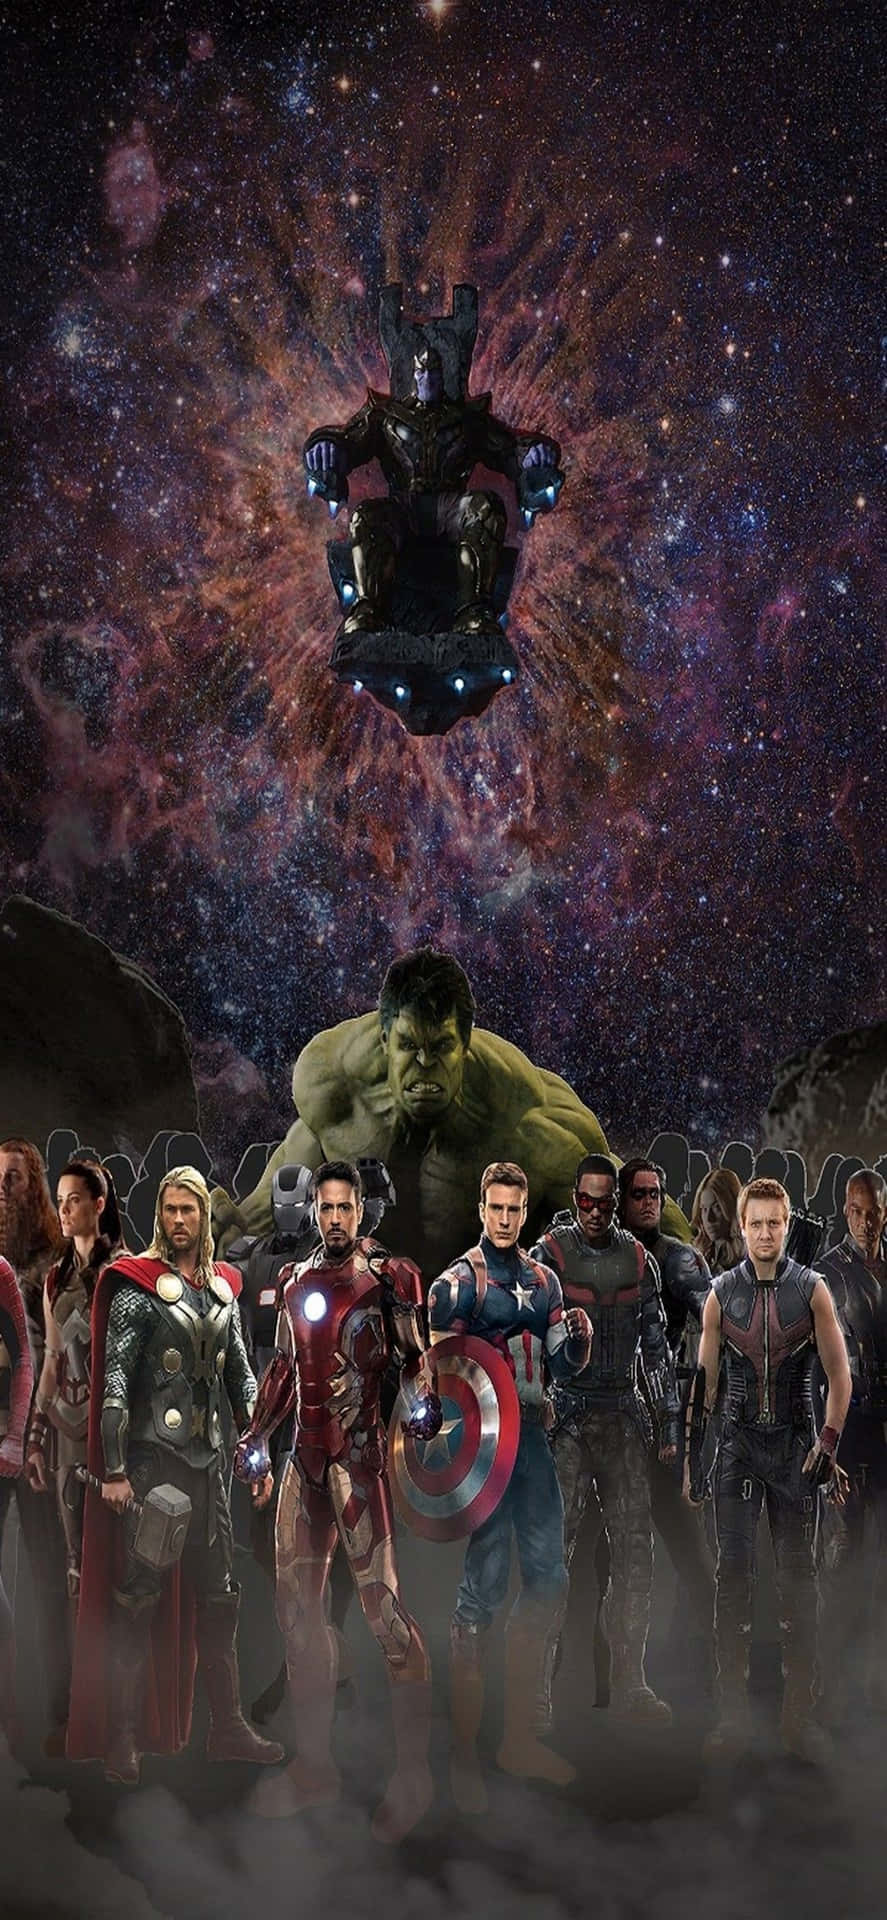 Consiguetus Avengers Favoritos De Marvel En Tu Nuevo Iphone Xs.